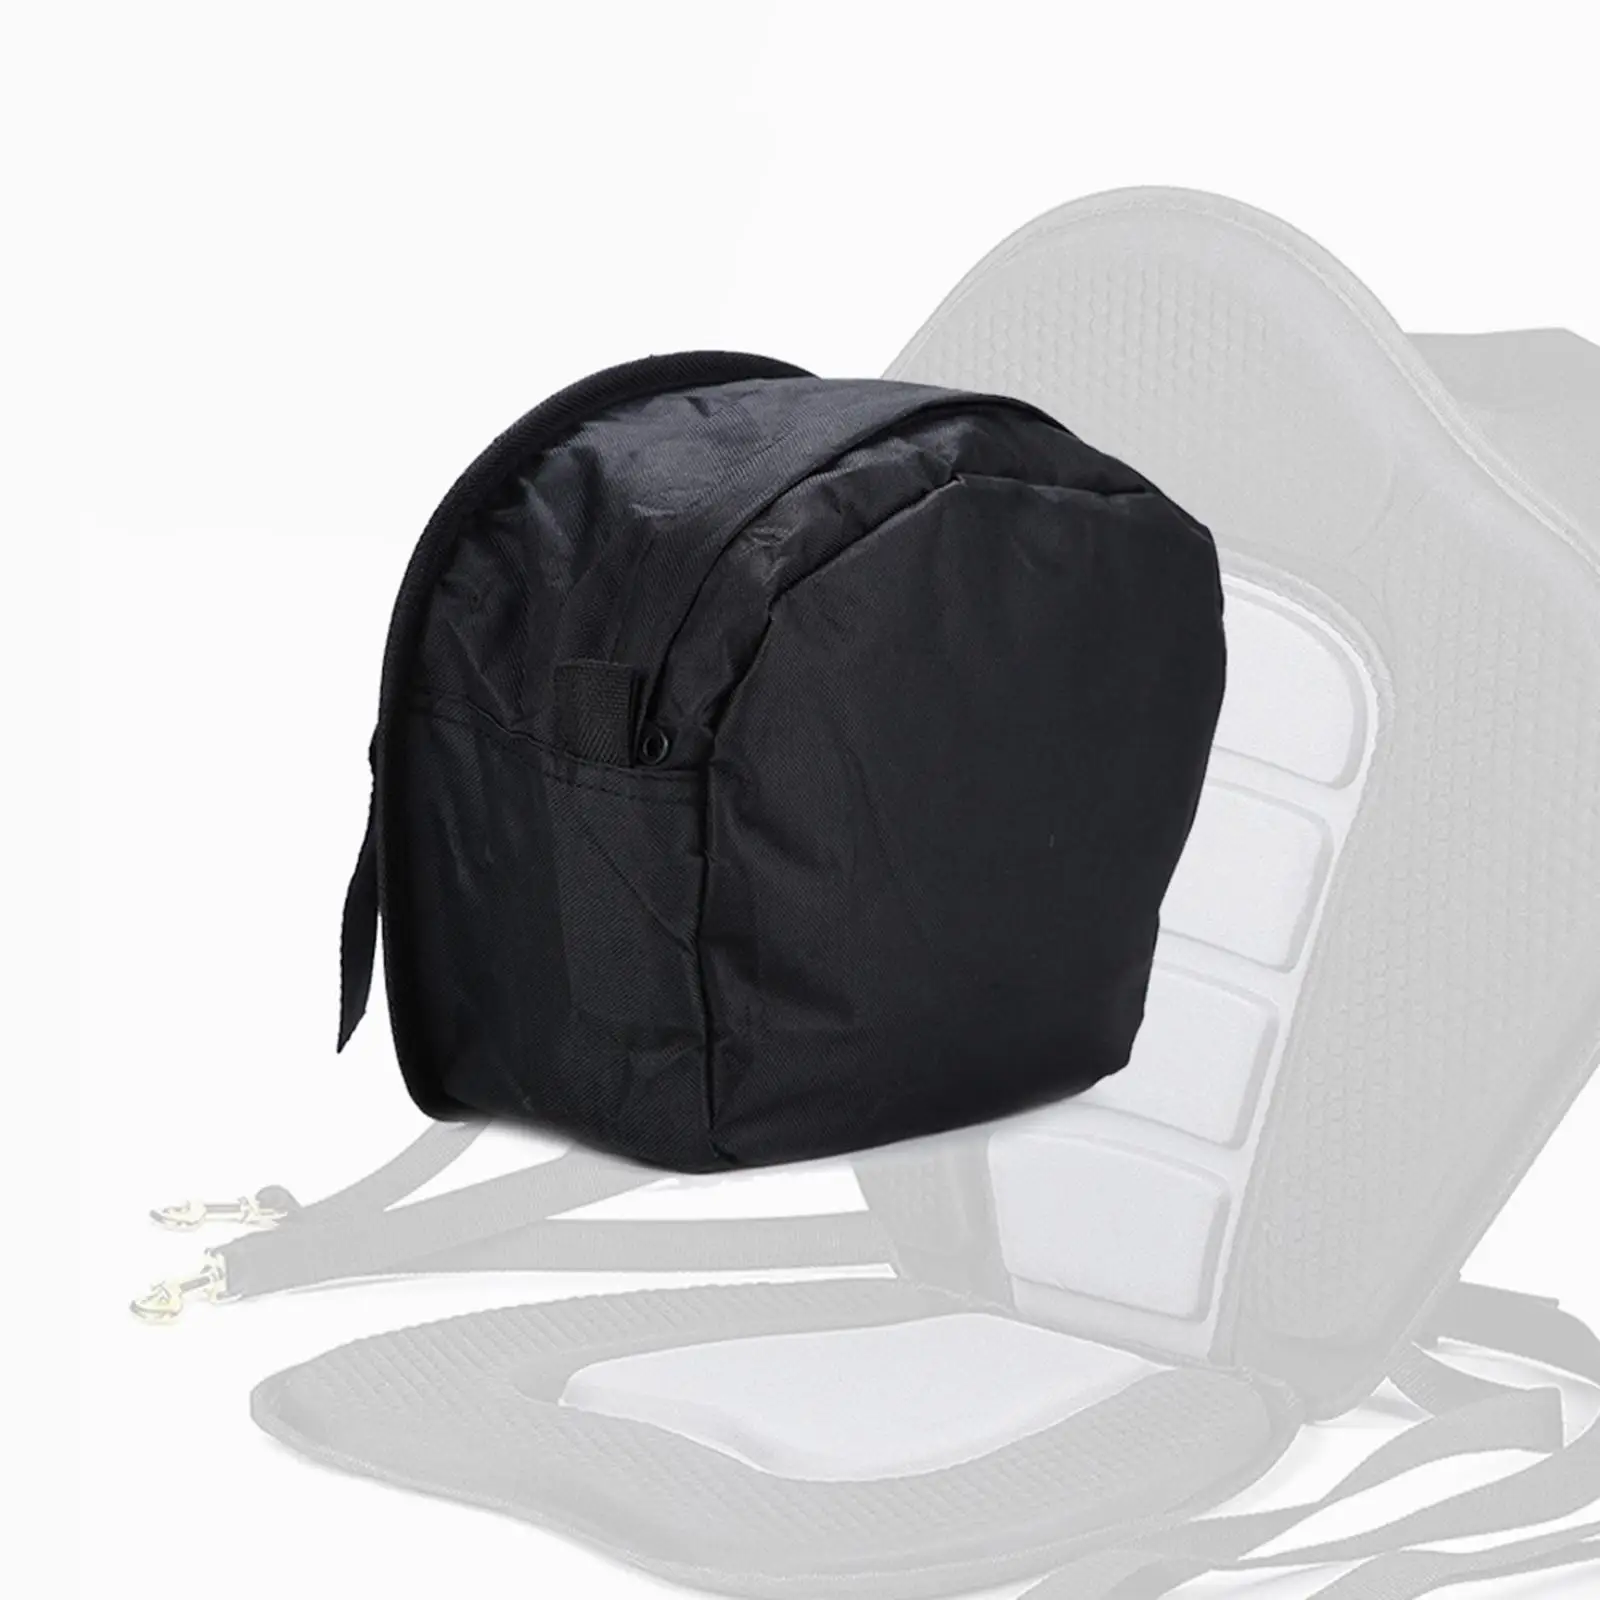 Kayak Seat Bag Storage Organizer Detachable Easy to Store Water Resistant Pouch Pocket for Kayaking Rafting Canoeing Fishing